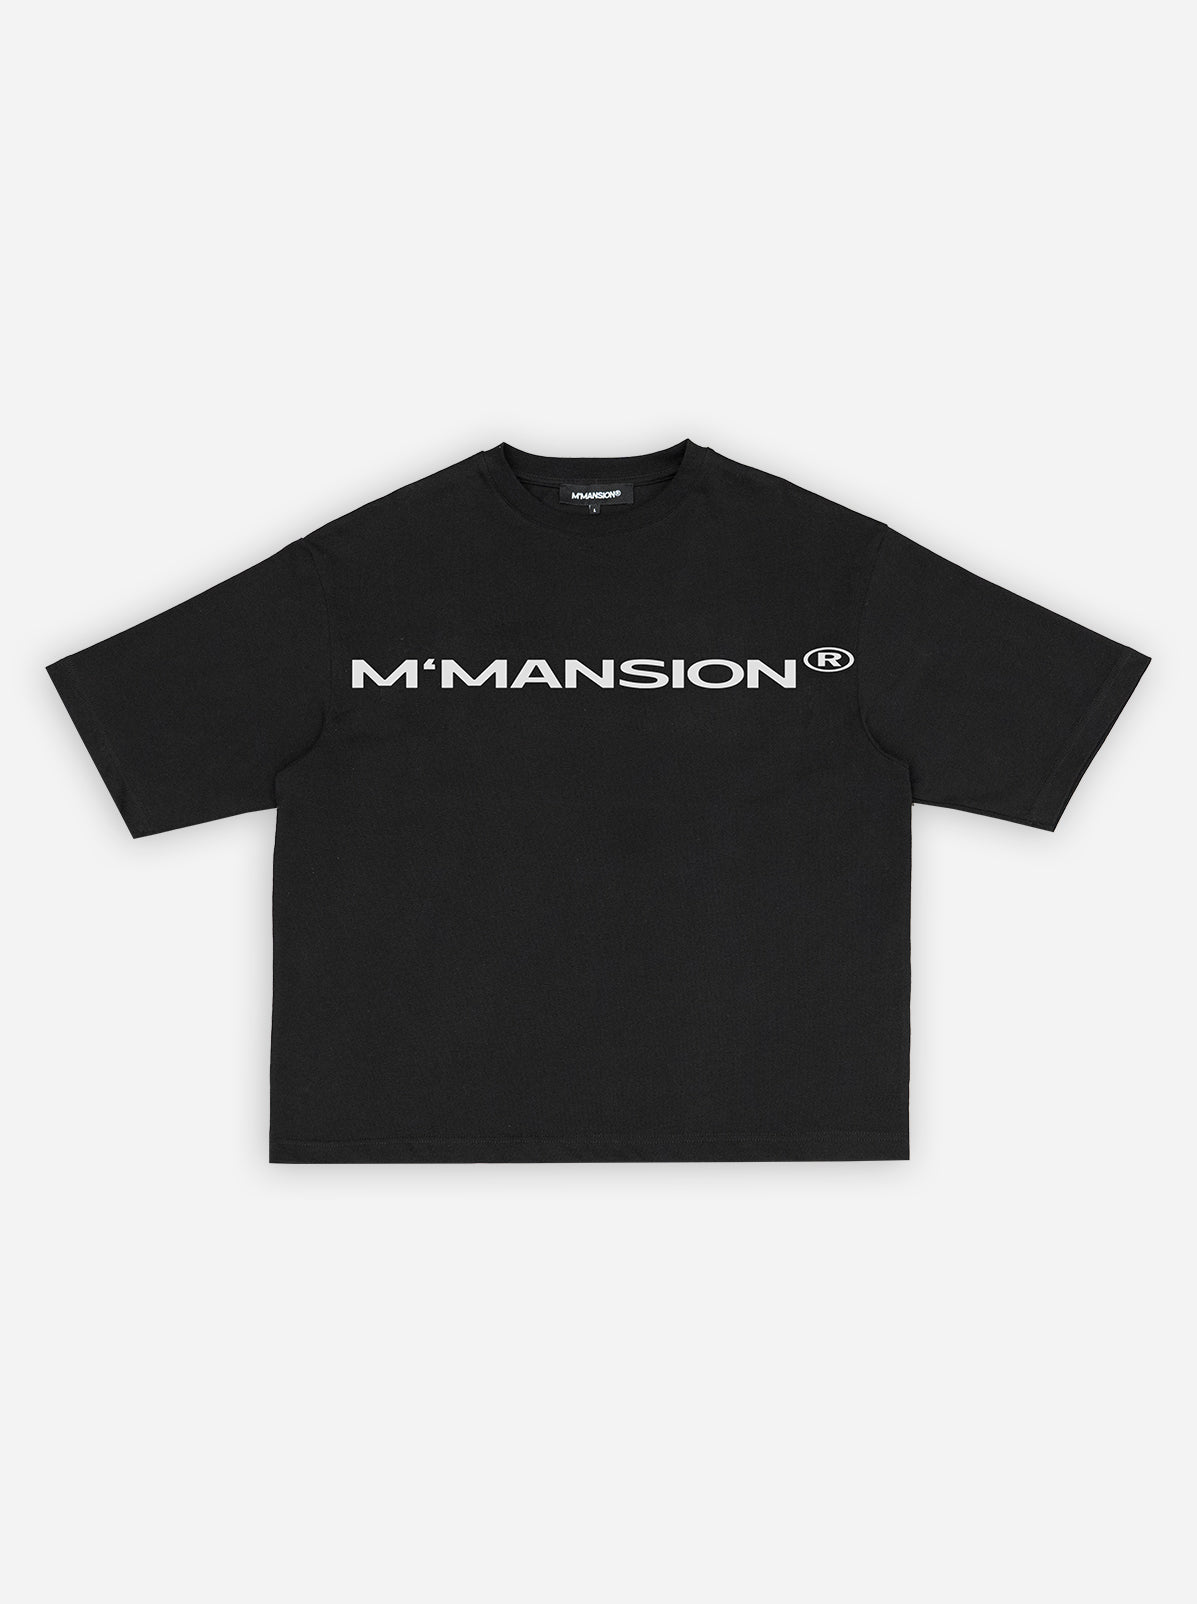 "MMANSION" T-SHIRT - BLACK